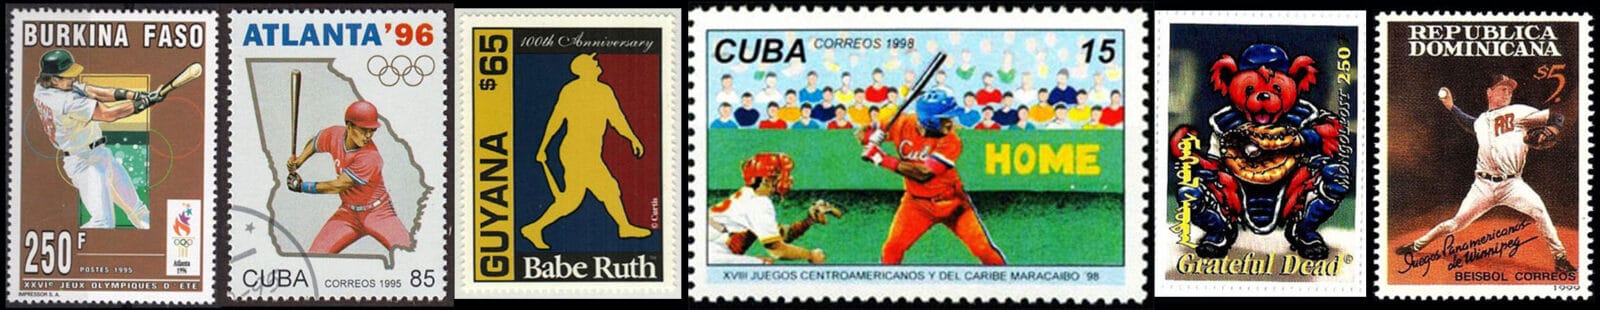 1995 to 1999 Baseball Postage Stamps Header